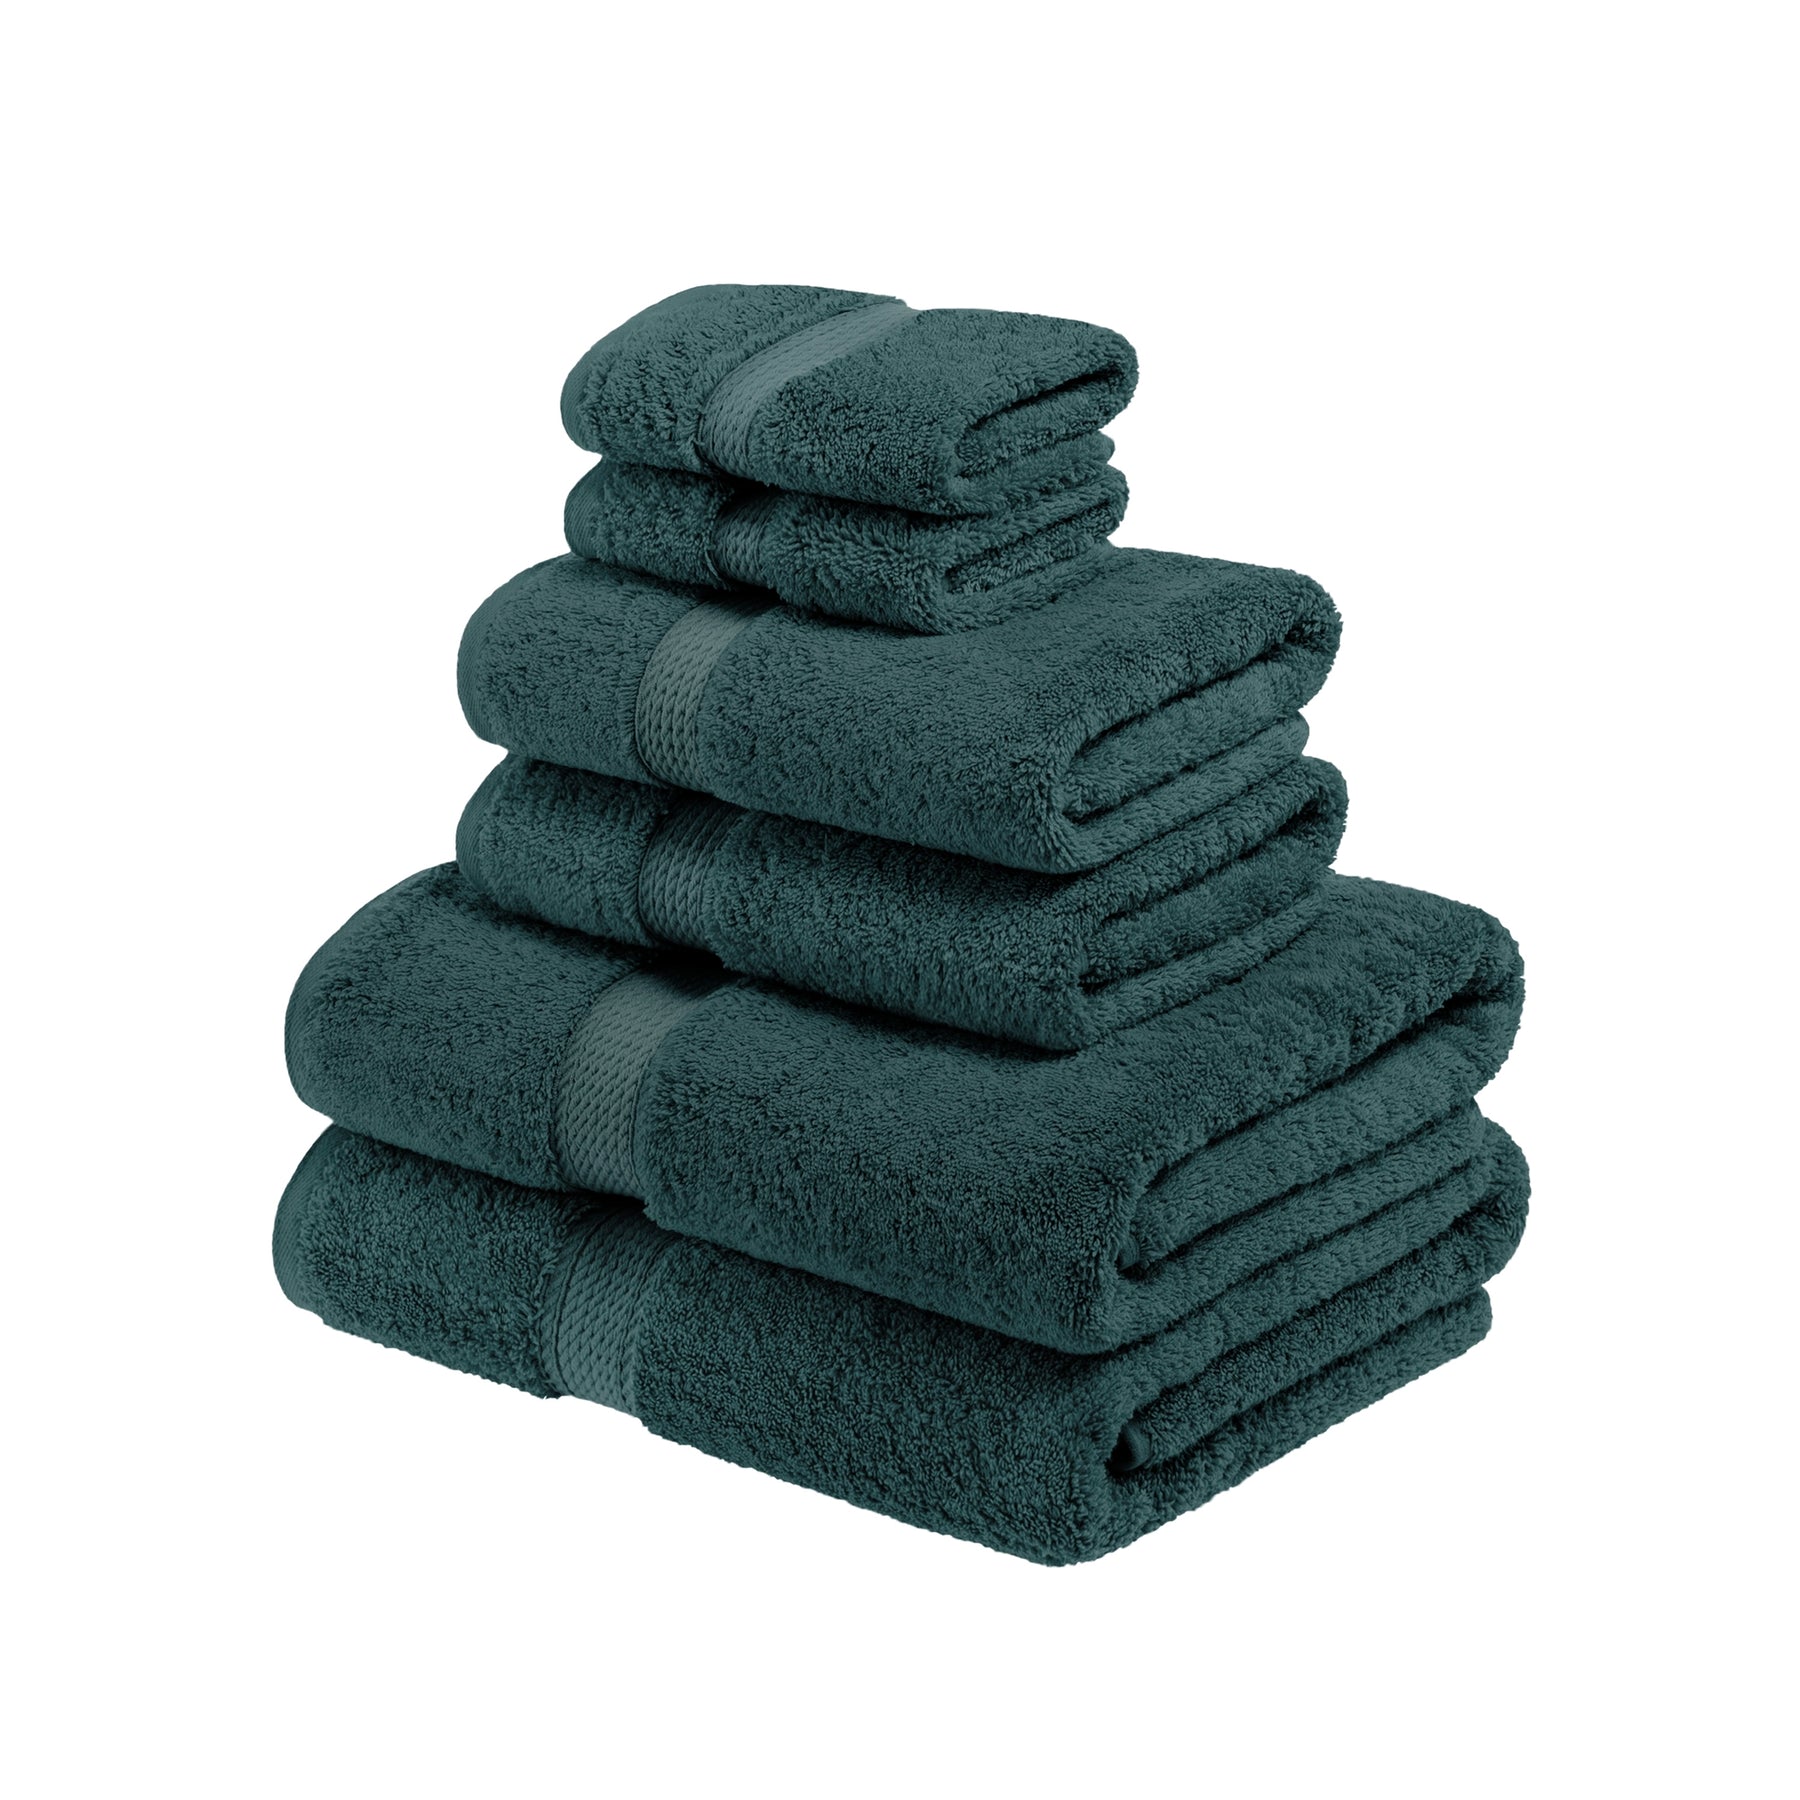 Pinzon Blended Egyptian Cotton 6-Piece Towel Set, Grey 